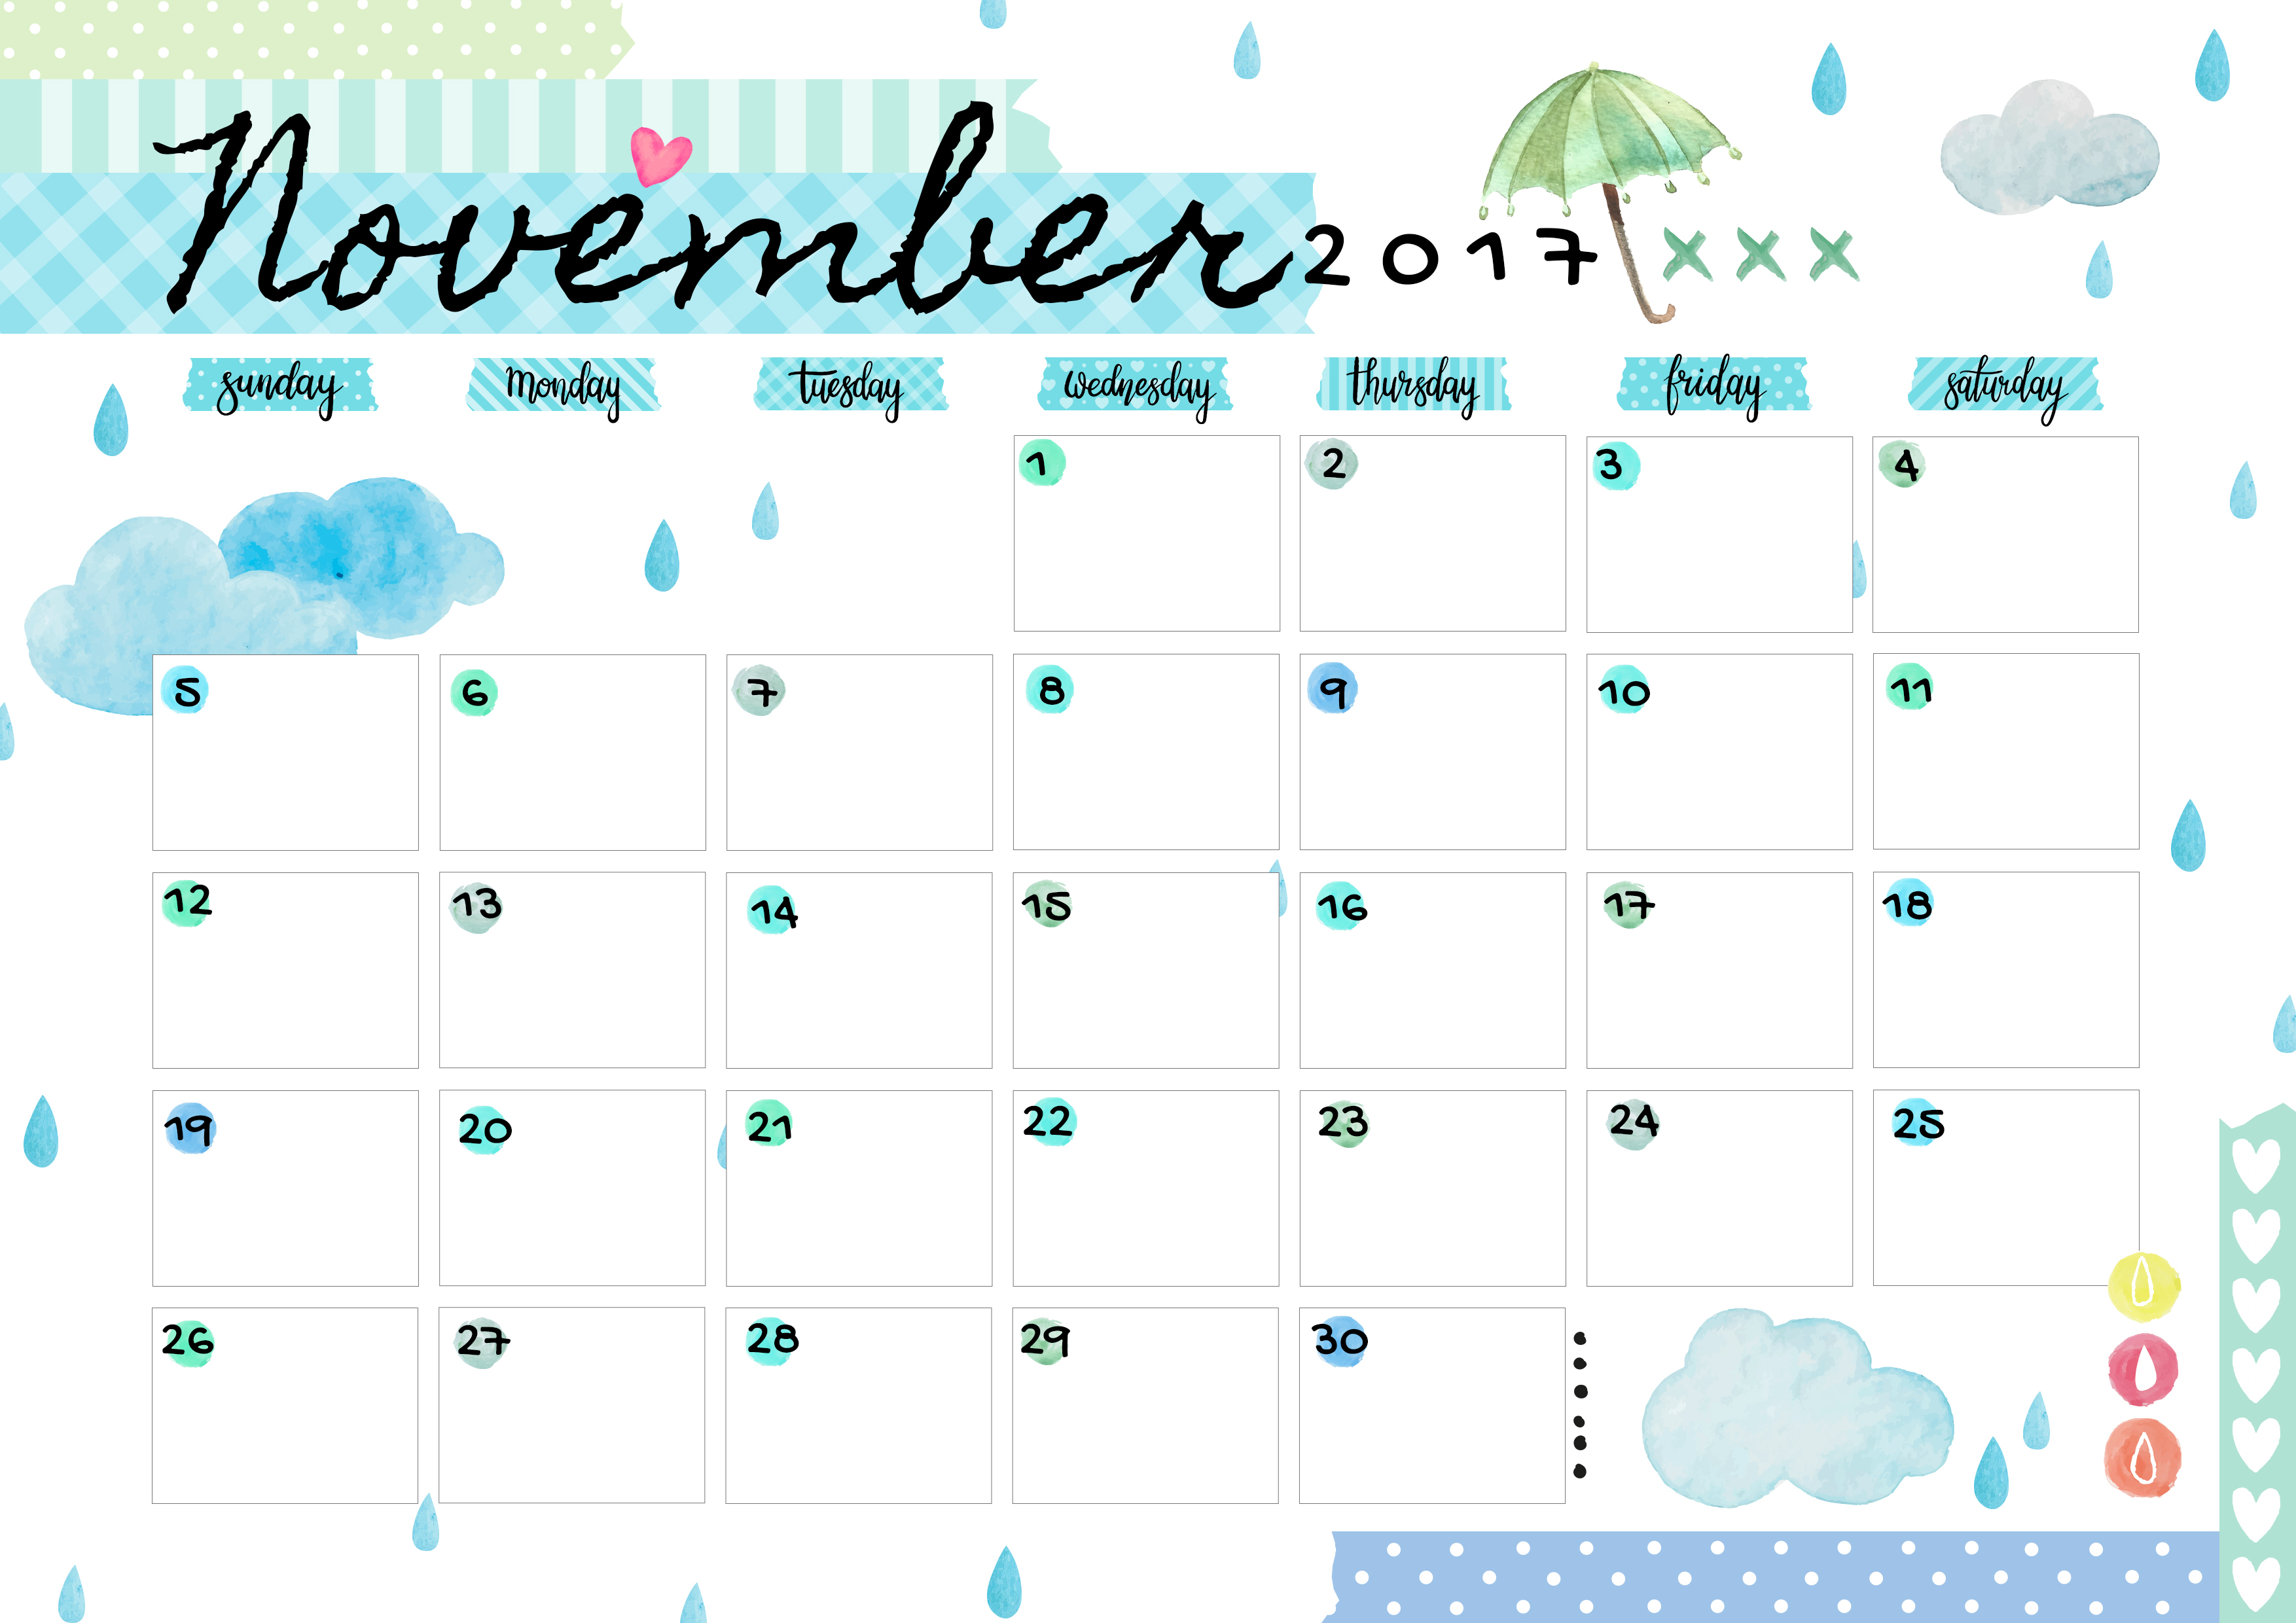 November 2017 Printable Colorful Calendar Free Download Colorful Zone